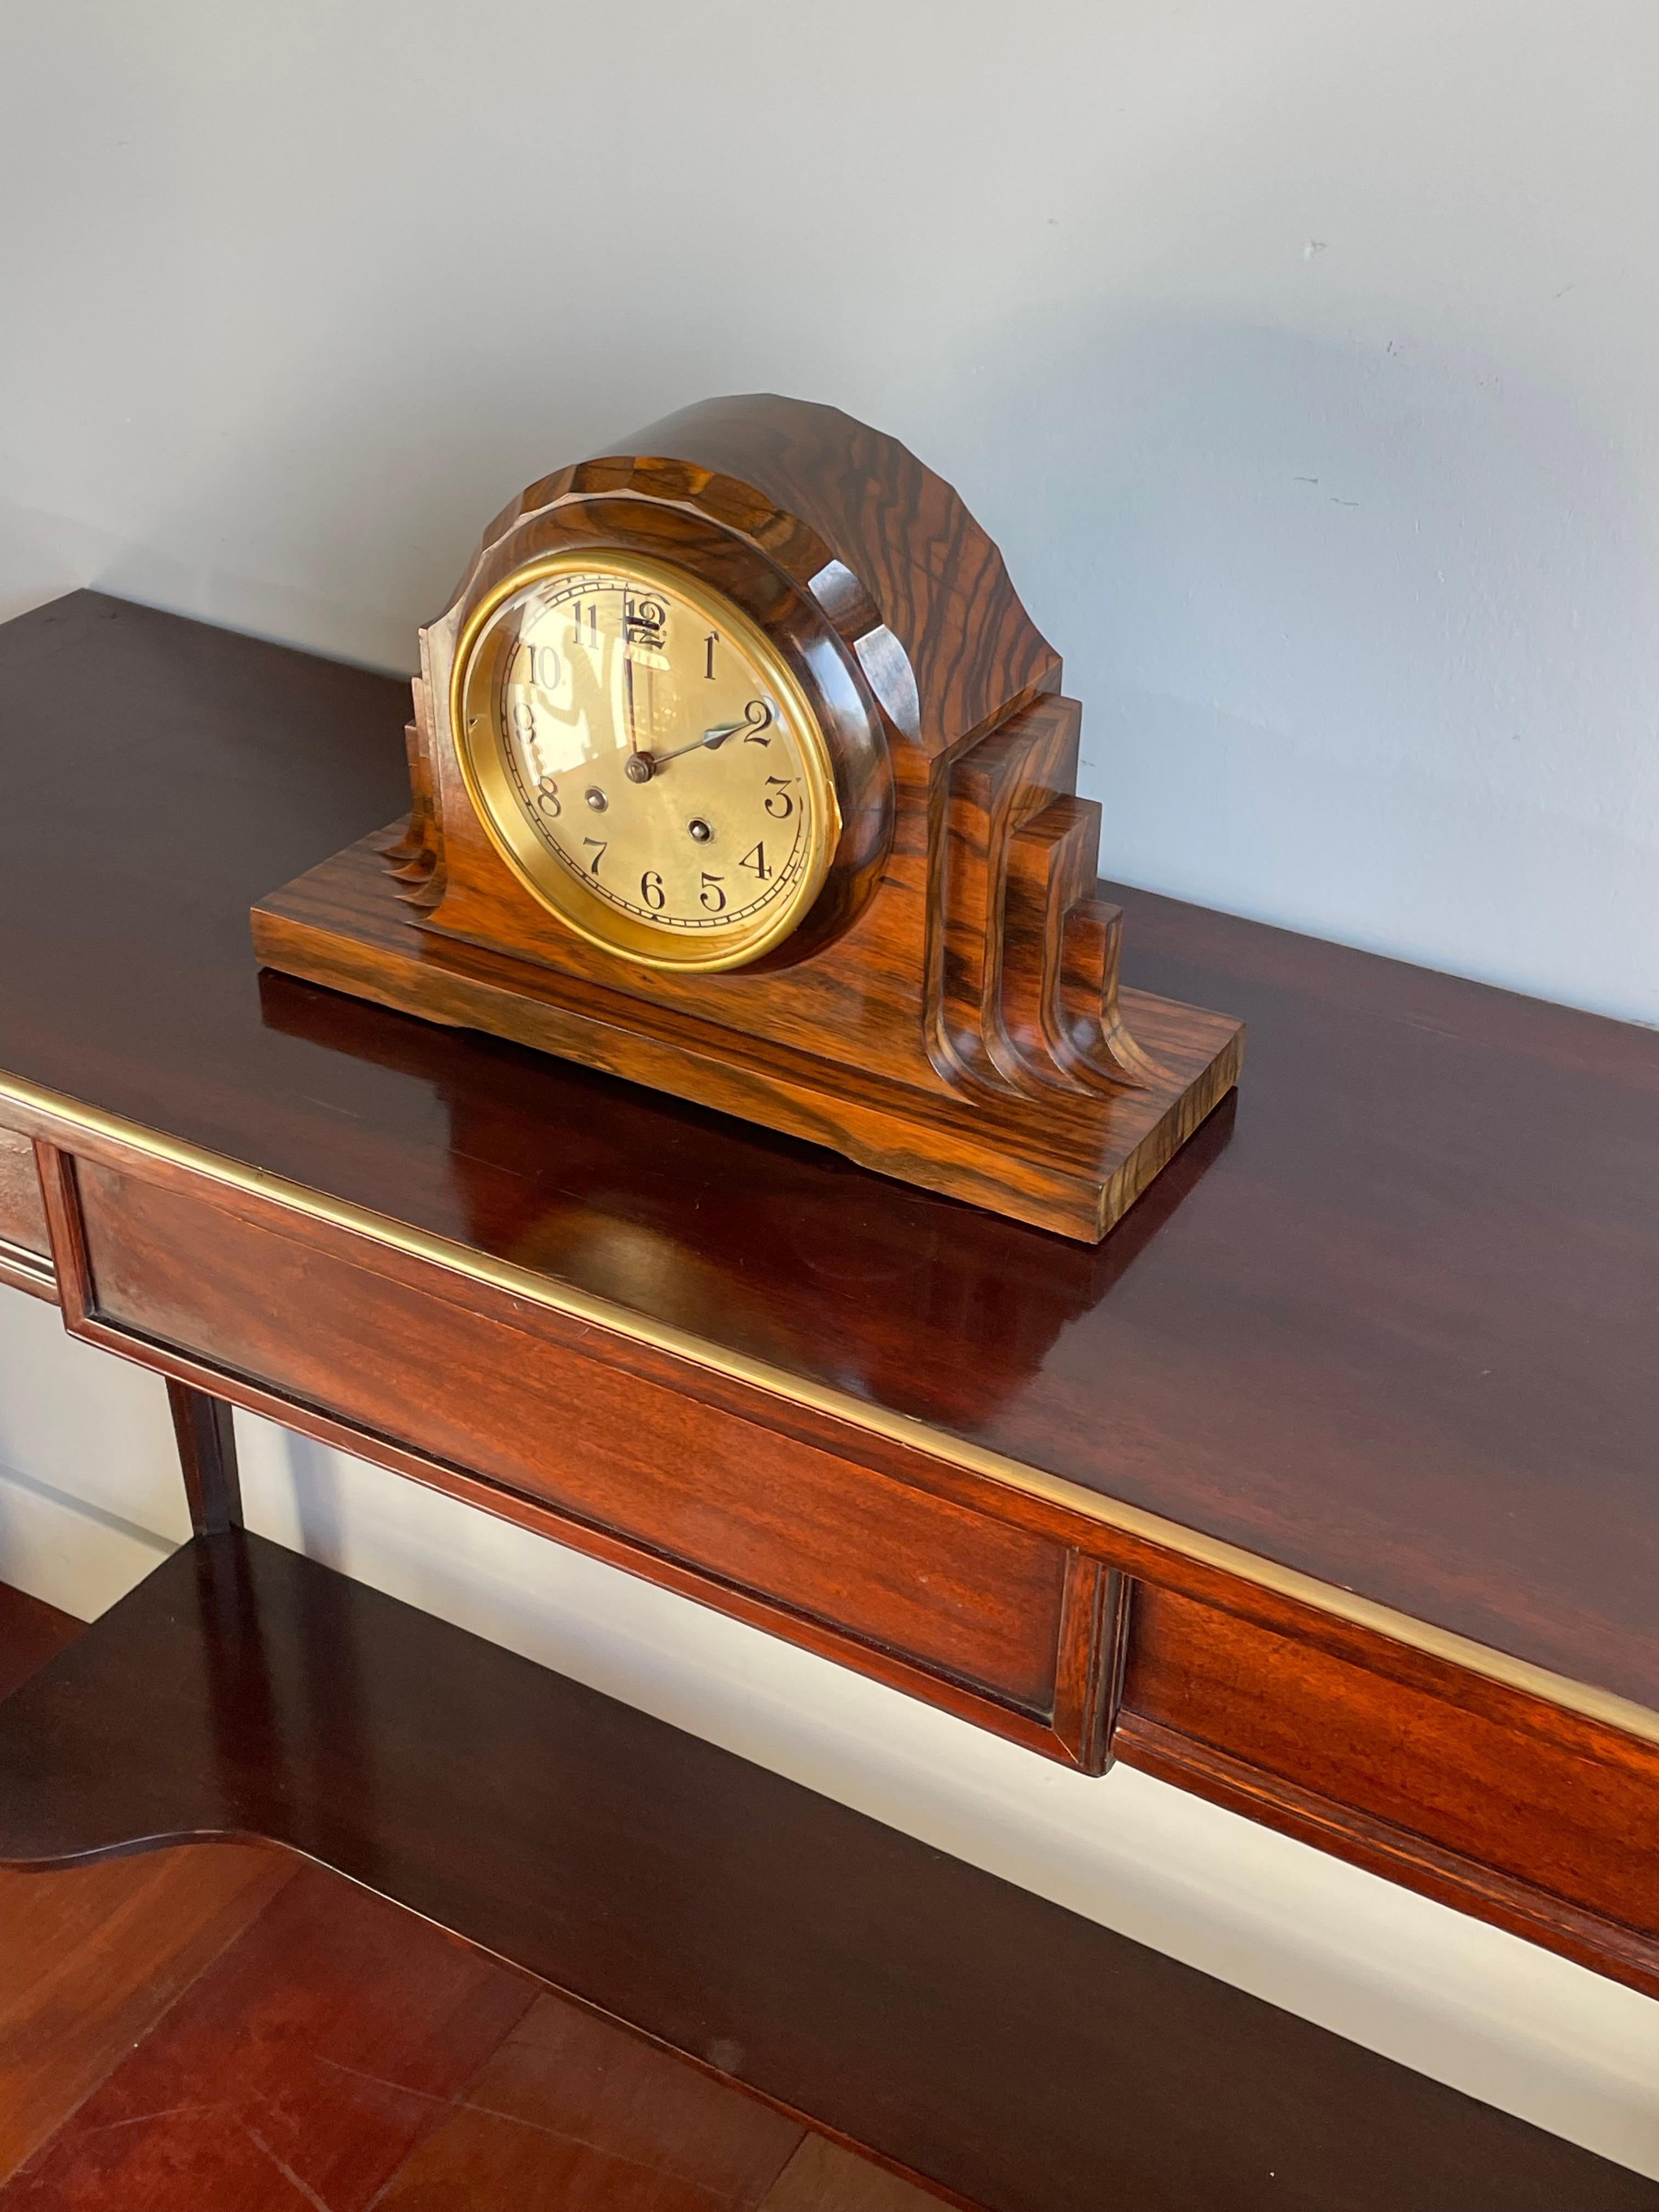 Top Design 1920s Art Deco Mantel Clock Made of Solid Coromandel w. Beveled Glass For Sale 9